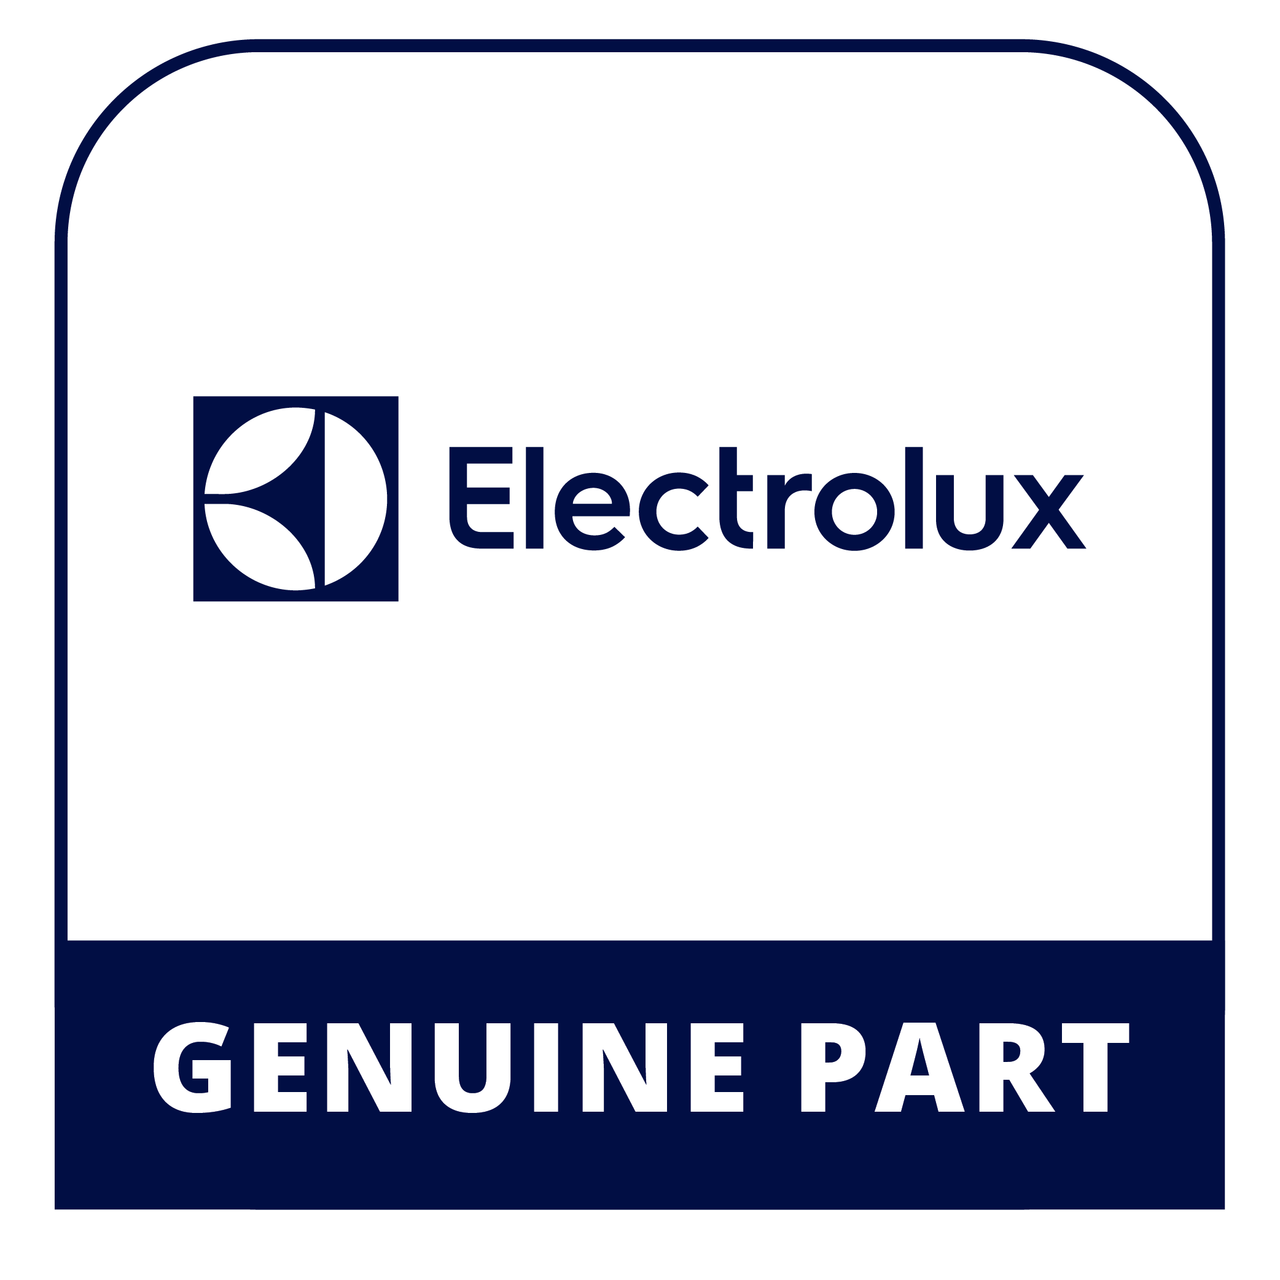 Frigidaire - Electrolux 5304502362 Motor - Genuine Electrolux Part